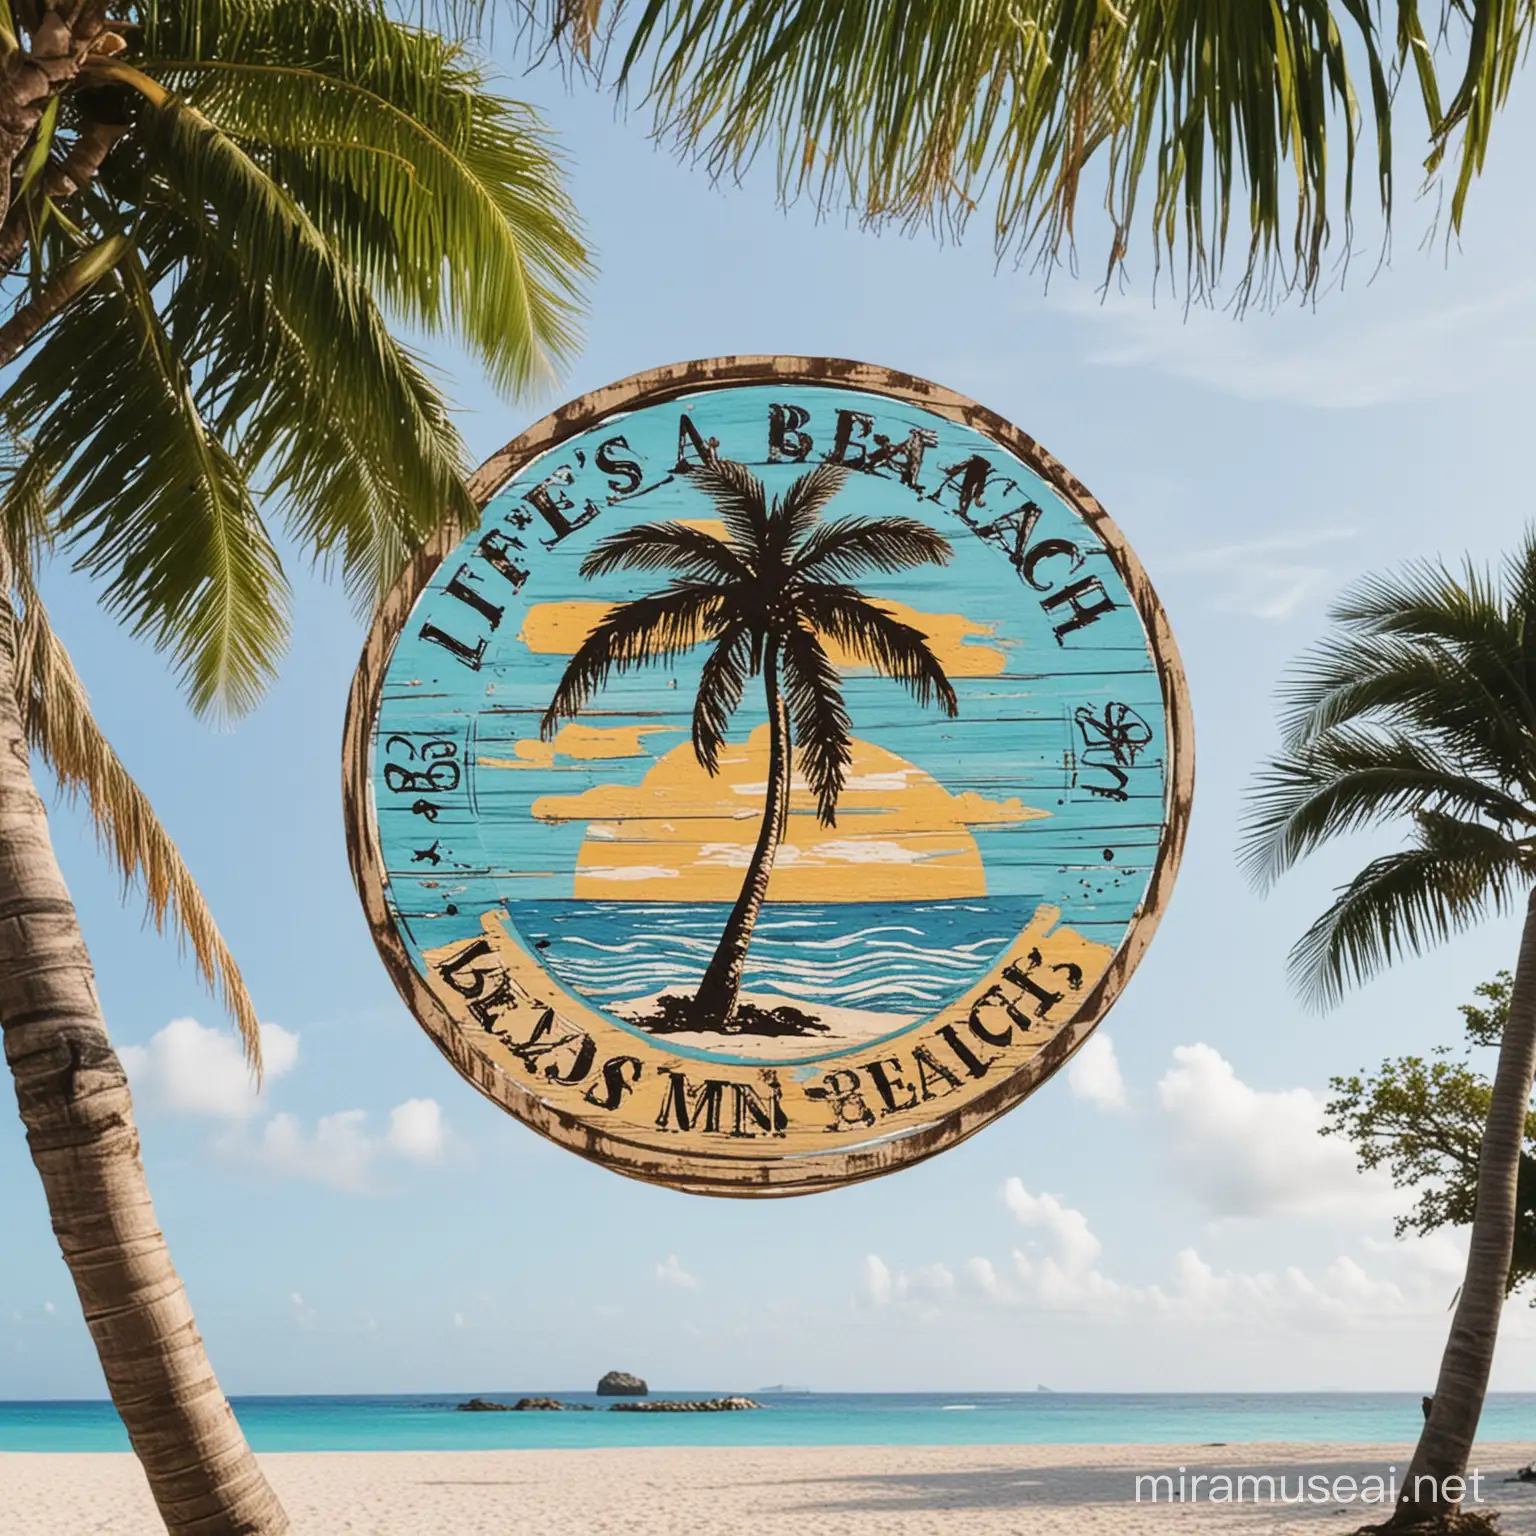 life's a beach logo in the tropics

